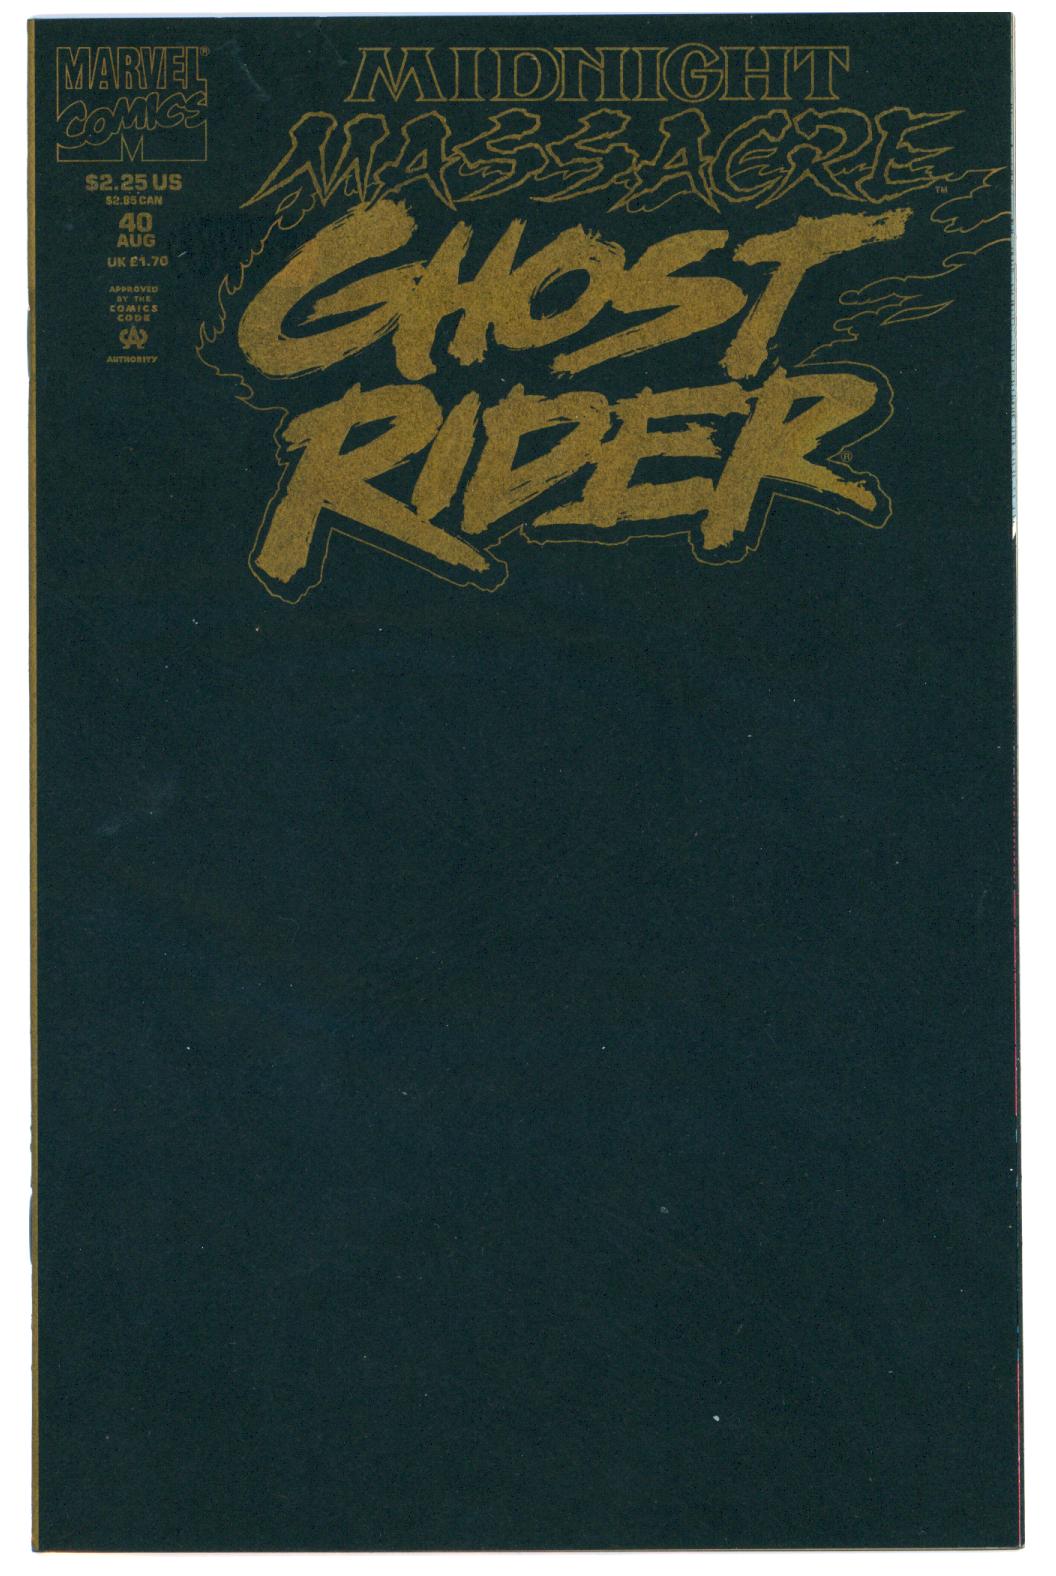 Ghost Rider Vol. 2 #40